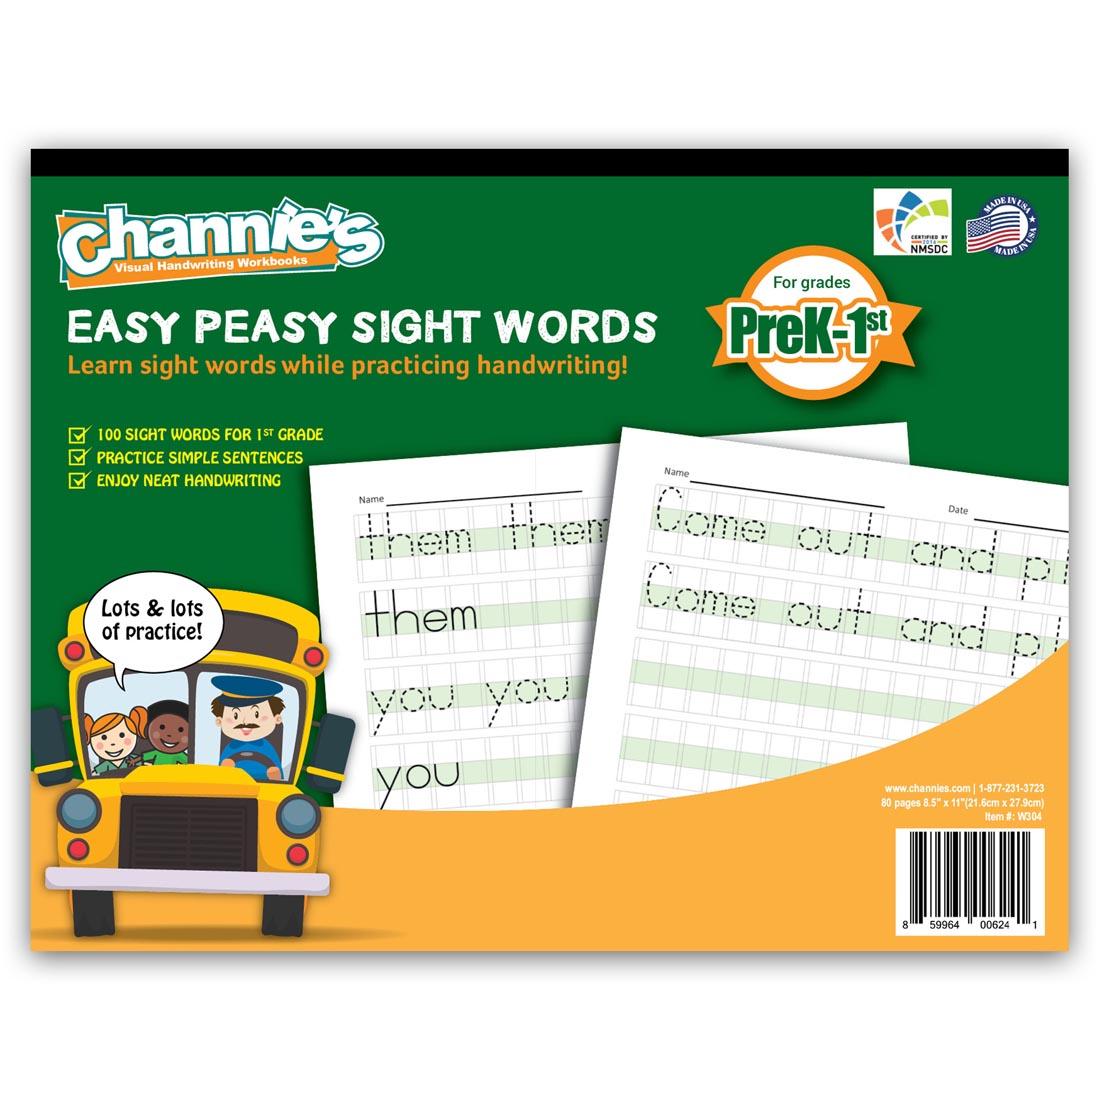 Channie's Visual Handwriting Workbook: Easy Peasy Sight Words